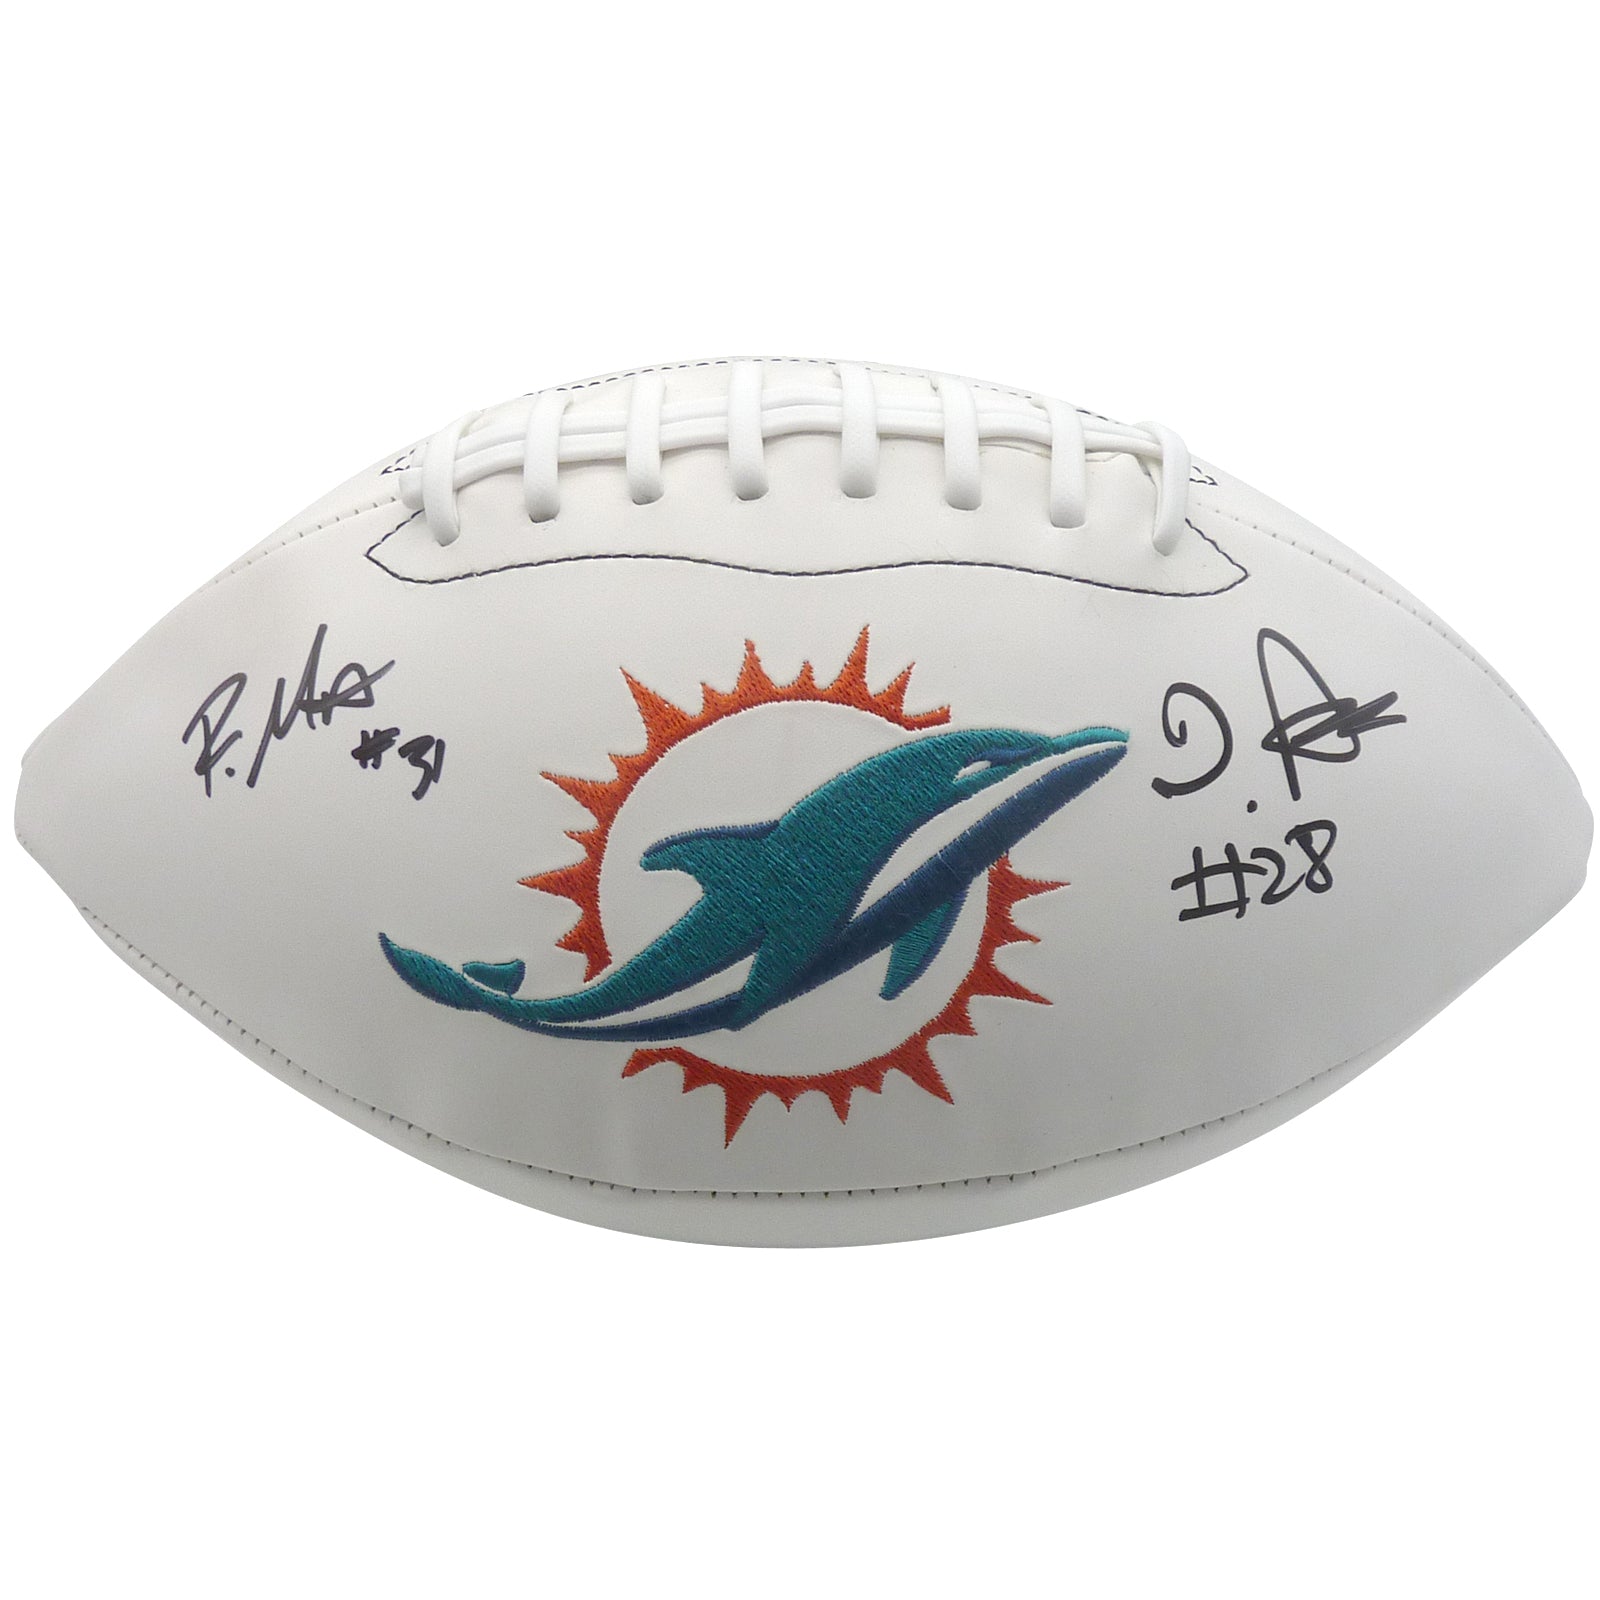 De'Von Achane And Raheem Mostert Autographed Miami Dolphins Logo Football - Beckett